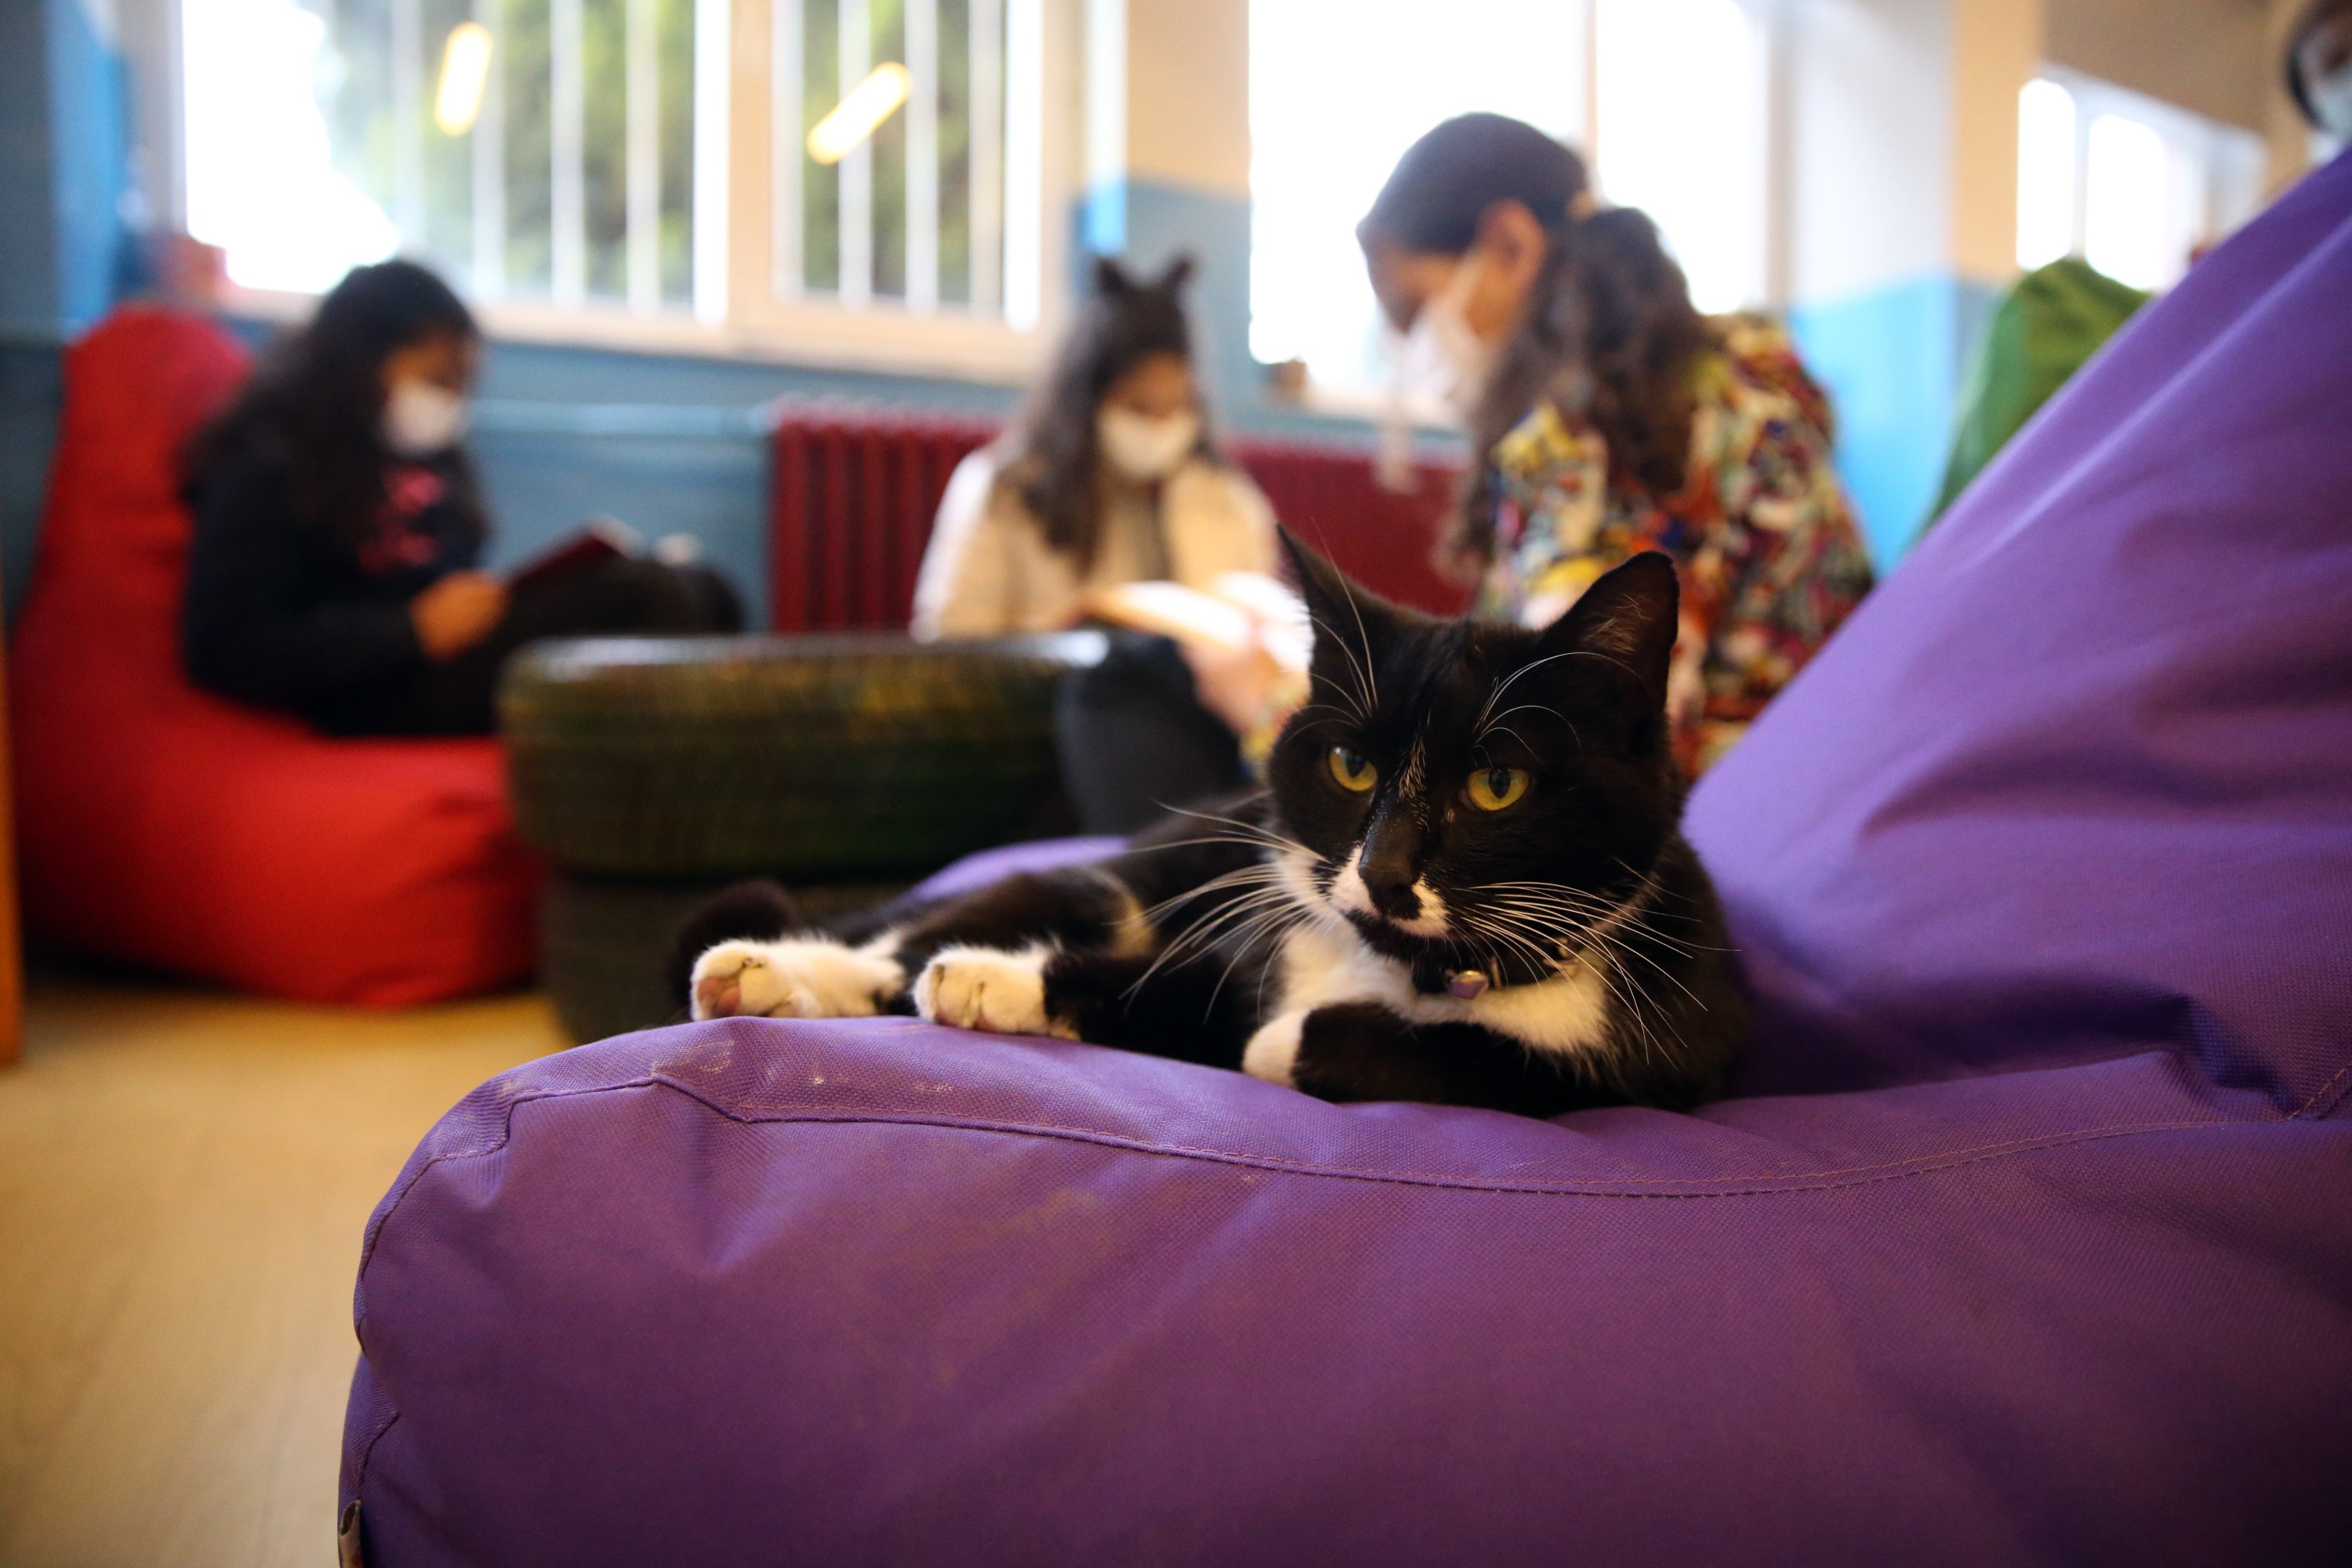 A cat sits on a cushion in the classroom, Aydın, western Turkey, Feb. 22, 2022. (AA Photo)